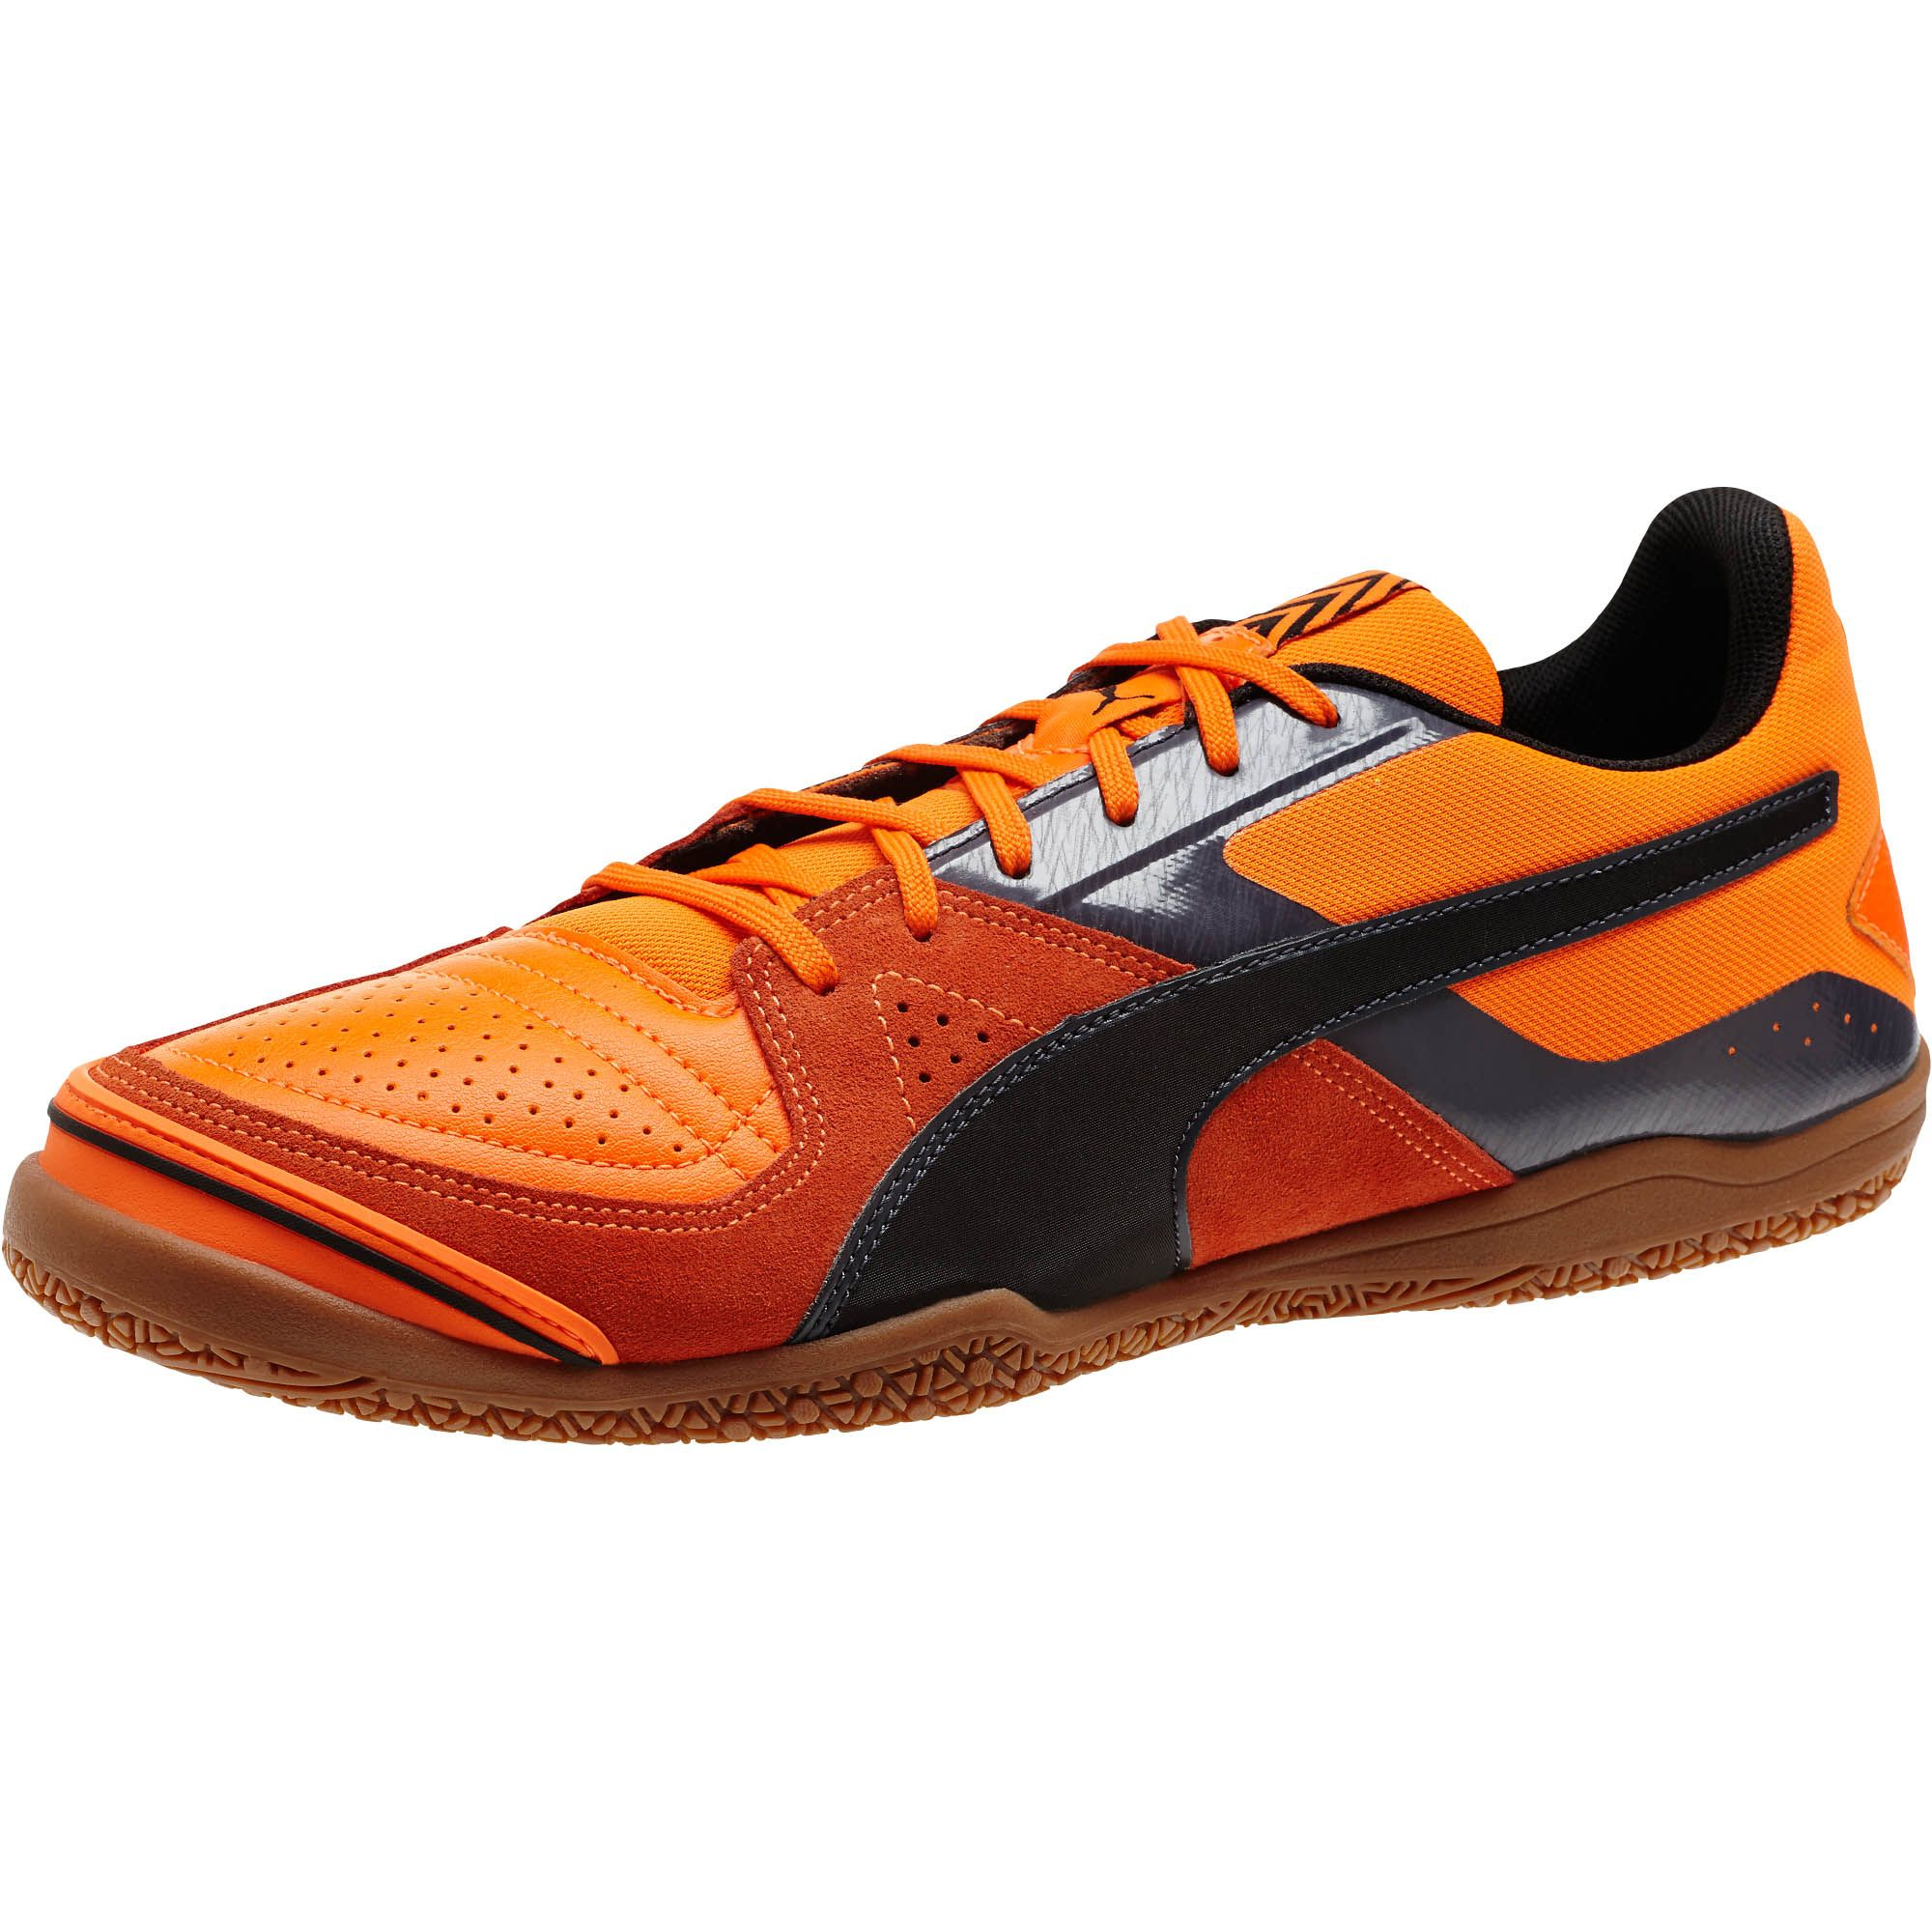 puma indoor soccer shoes for men